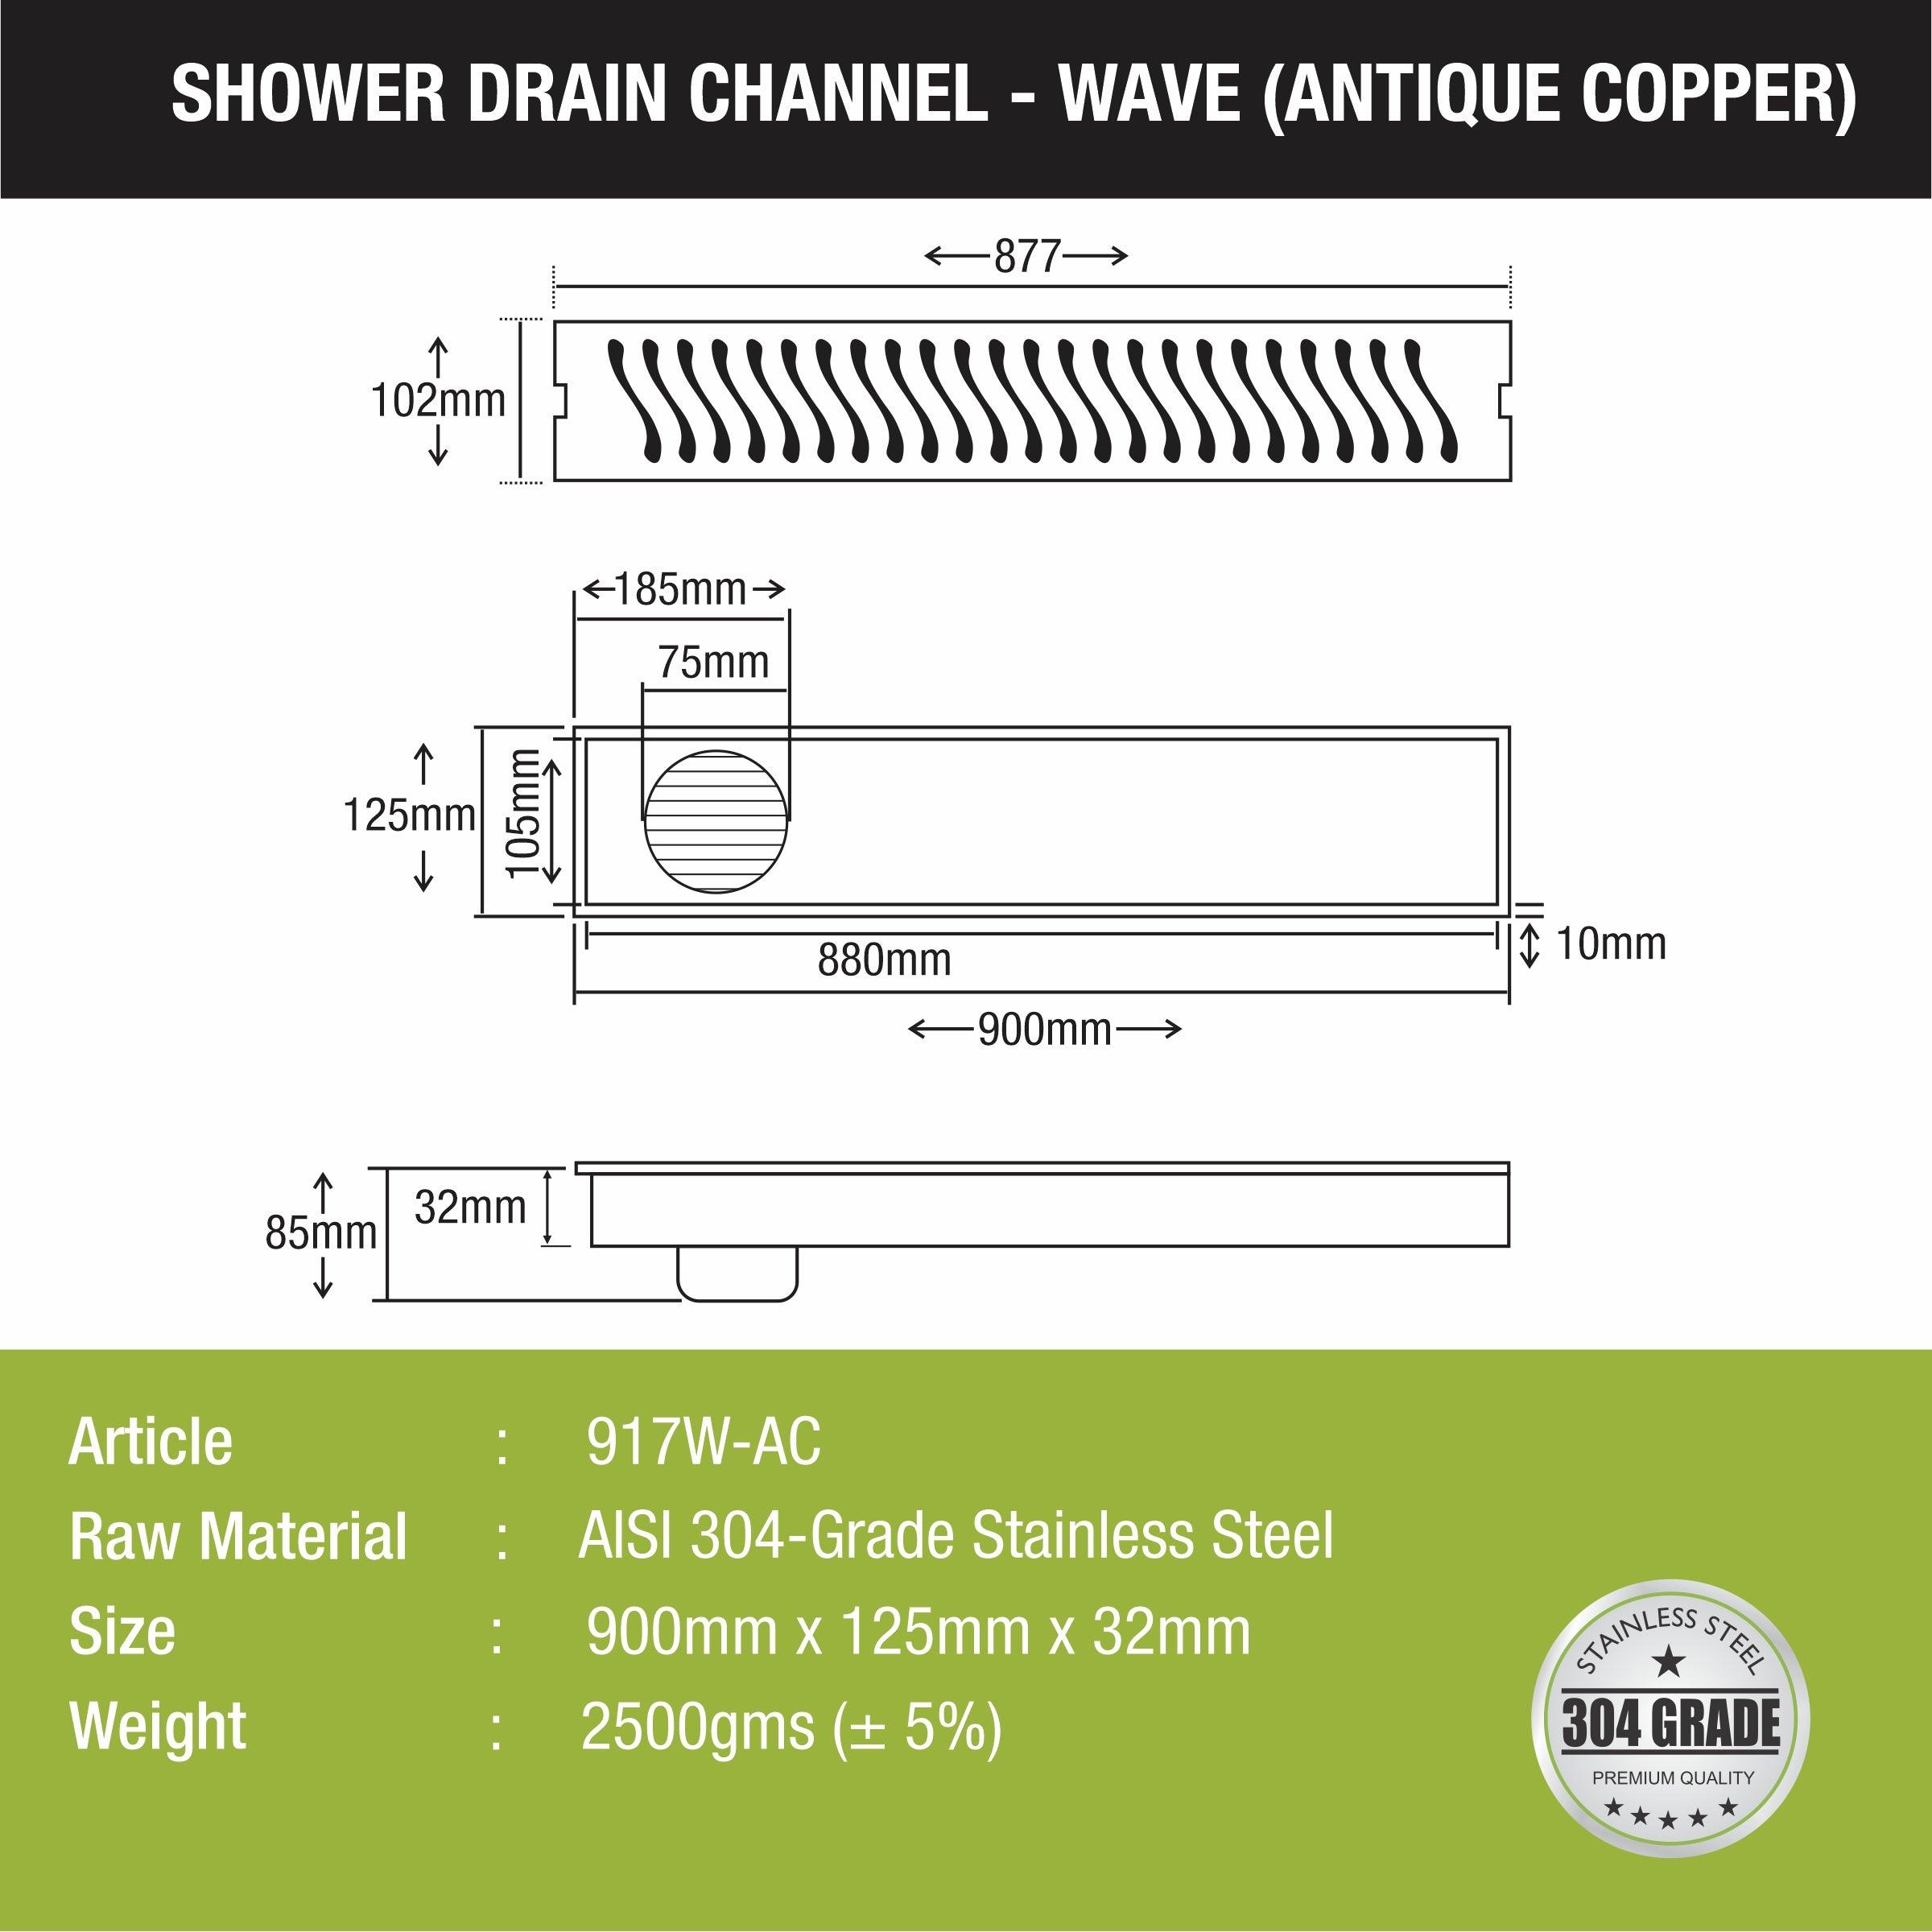 Wave Shower Drain Channel - Antique Copper (36 x 5 Inches) - LIPKA